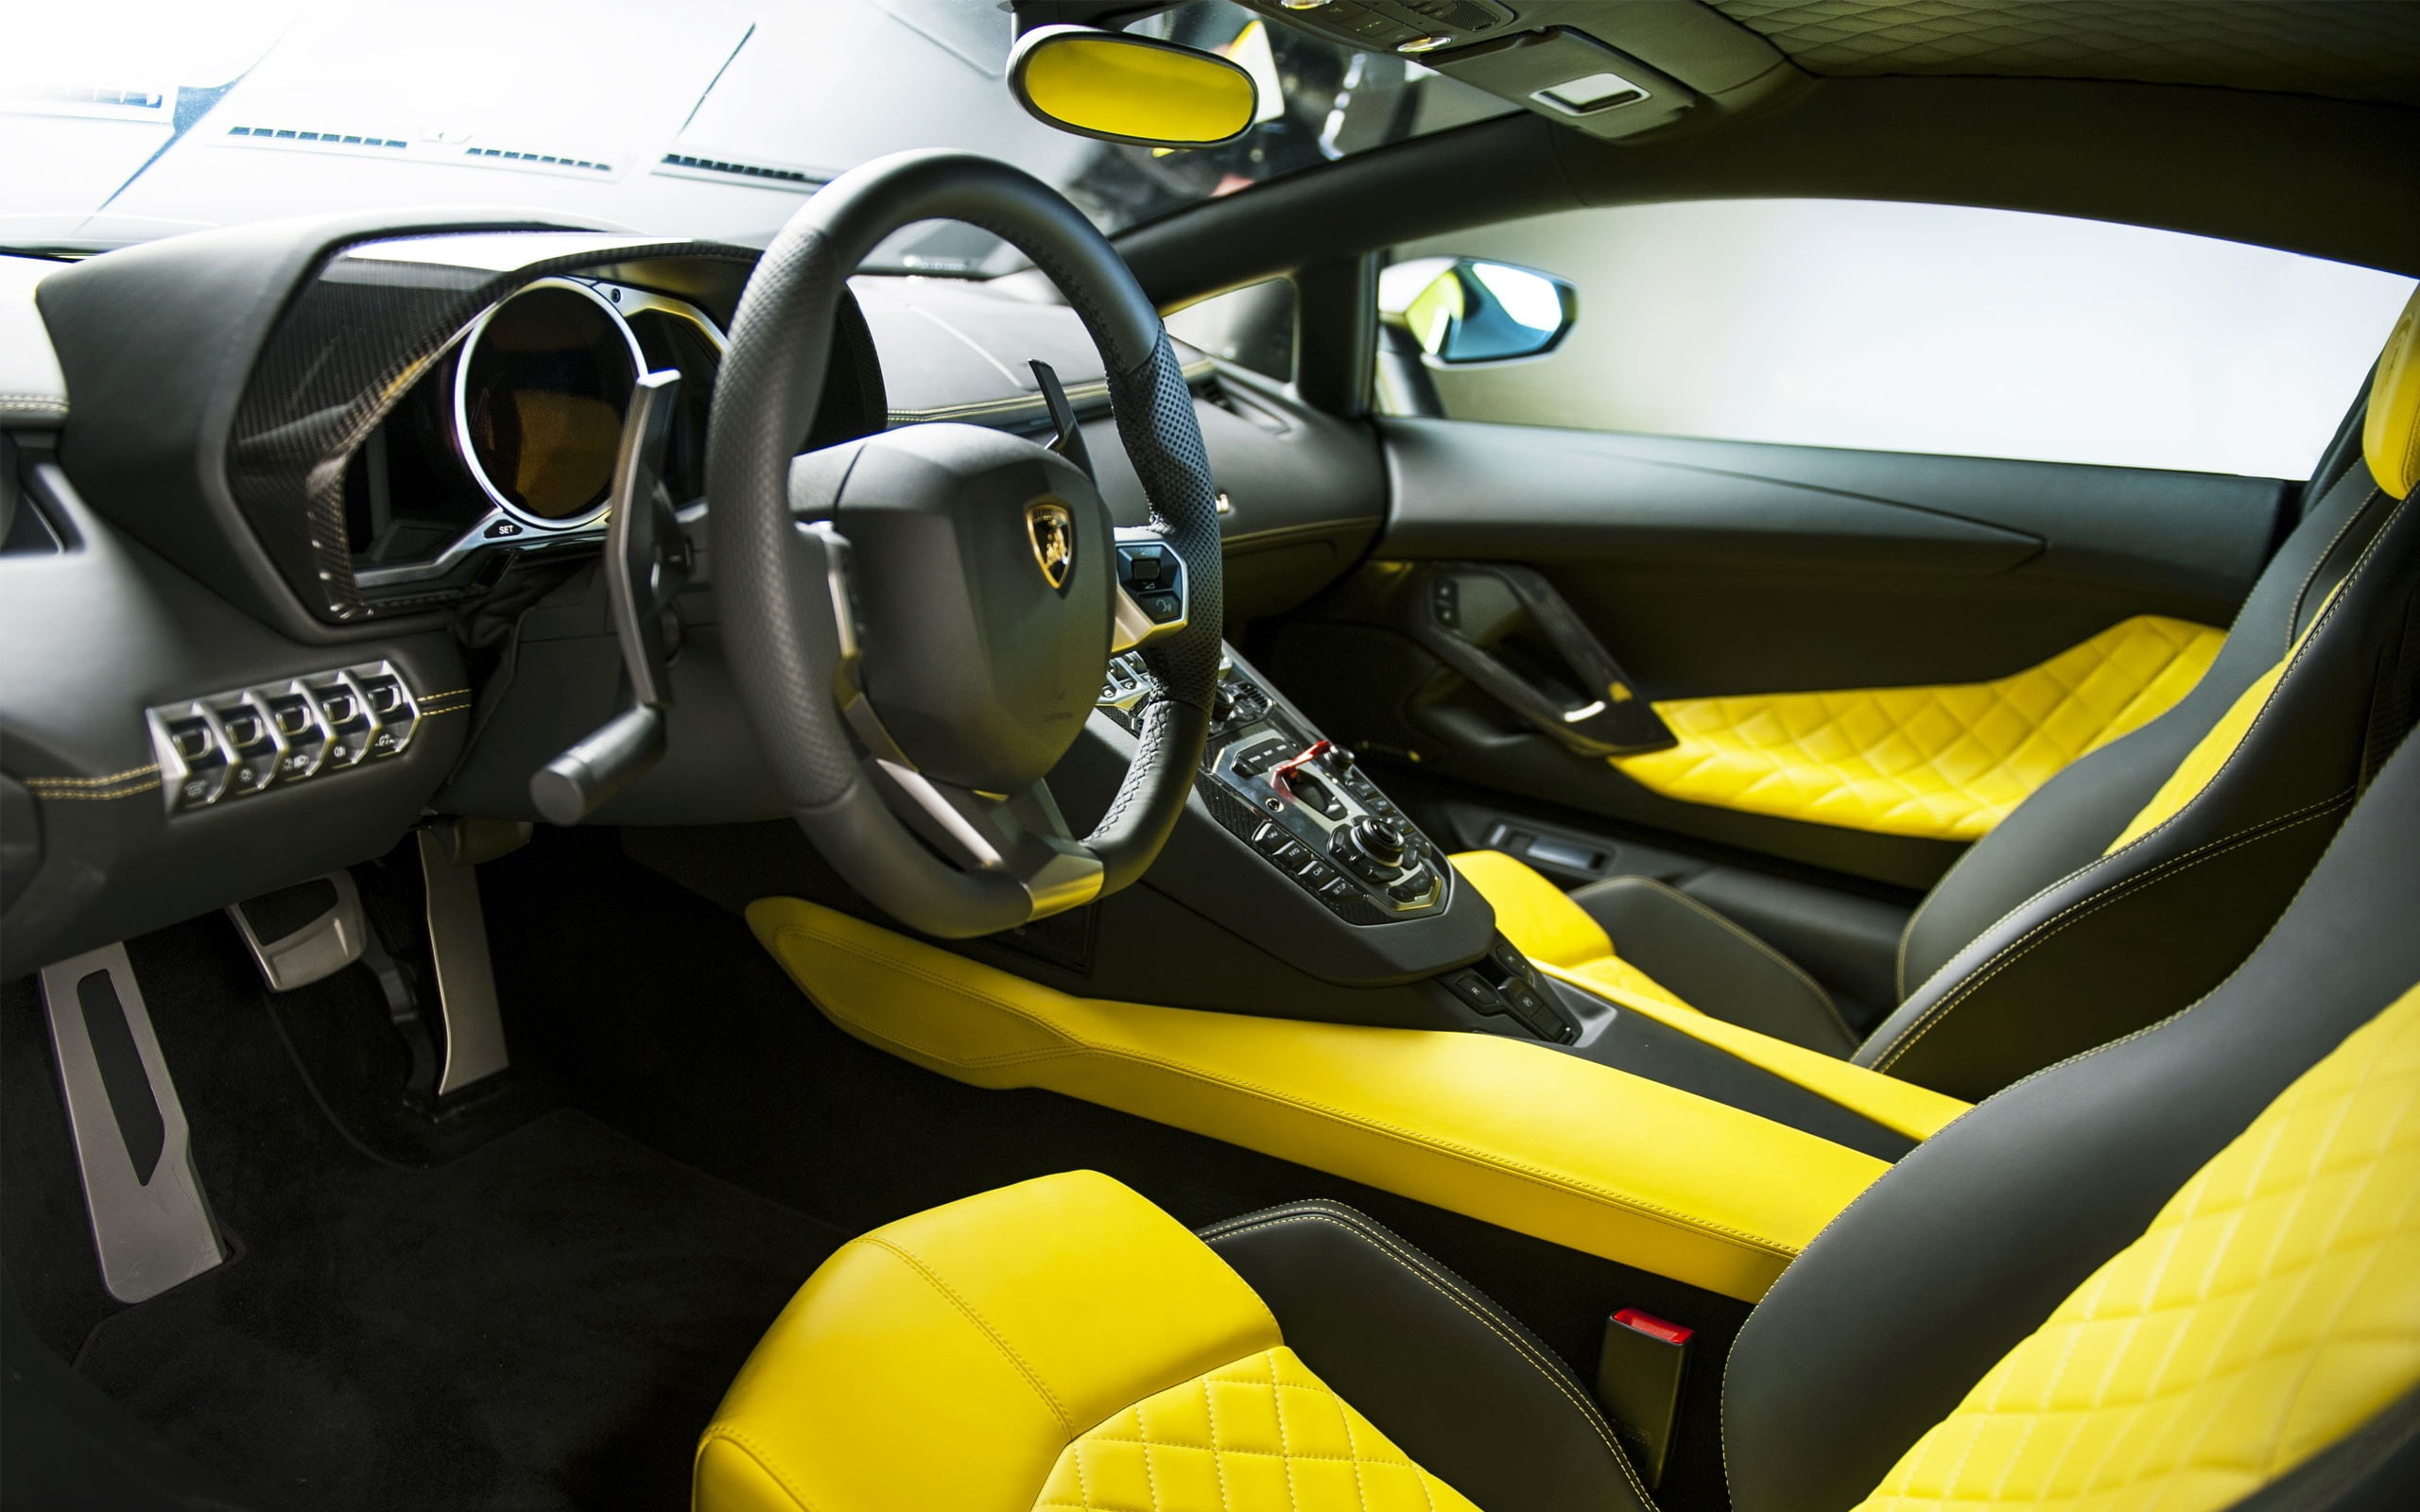 2013 Lamborghini Aventador LP720-4 50 Anniversario.., yellow and black Lamborghini interior